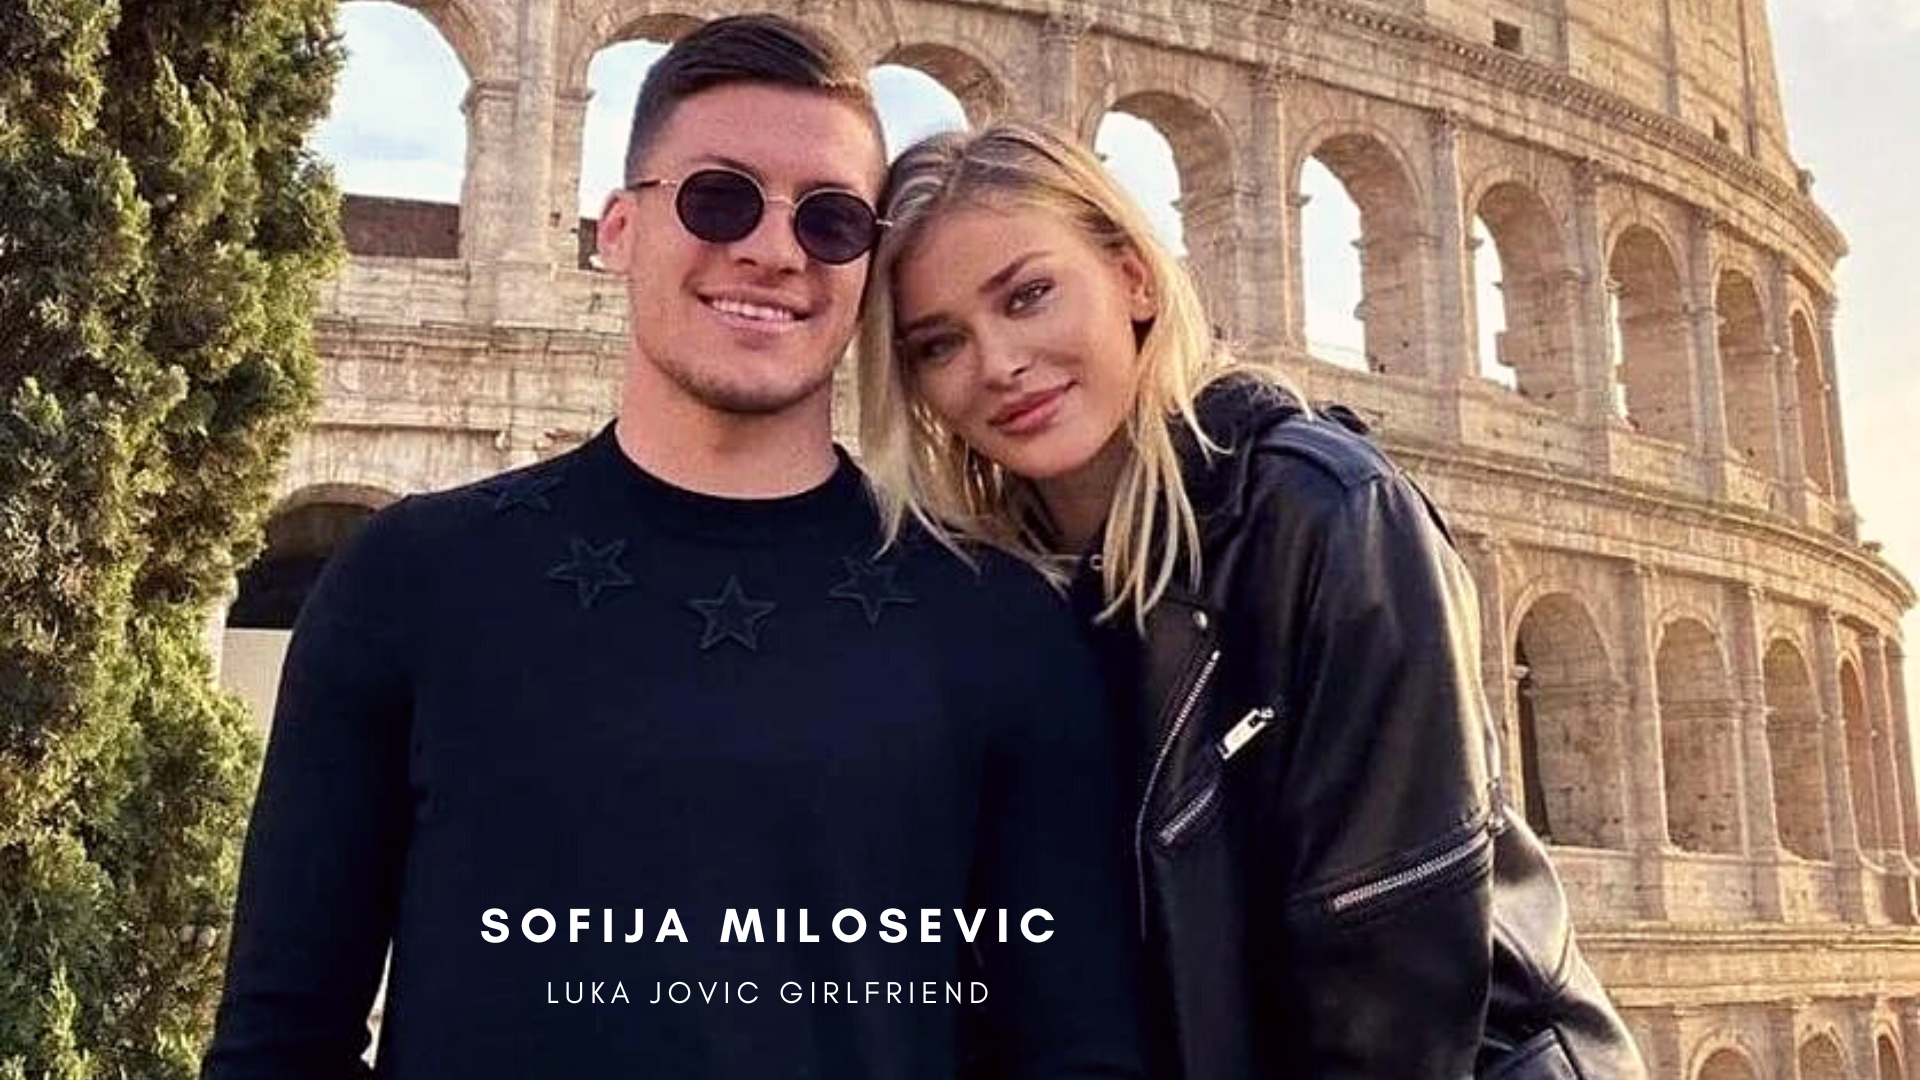 Luka Jovic with his girlfriend Sofija Milosevic. (Credit: Instagram)